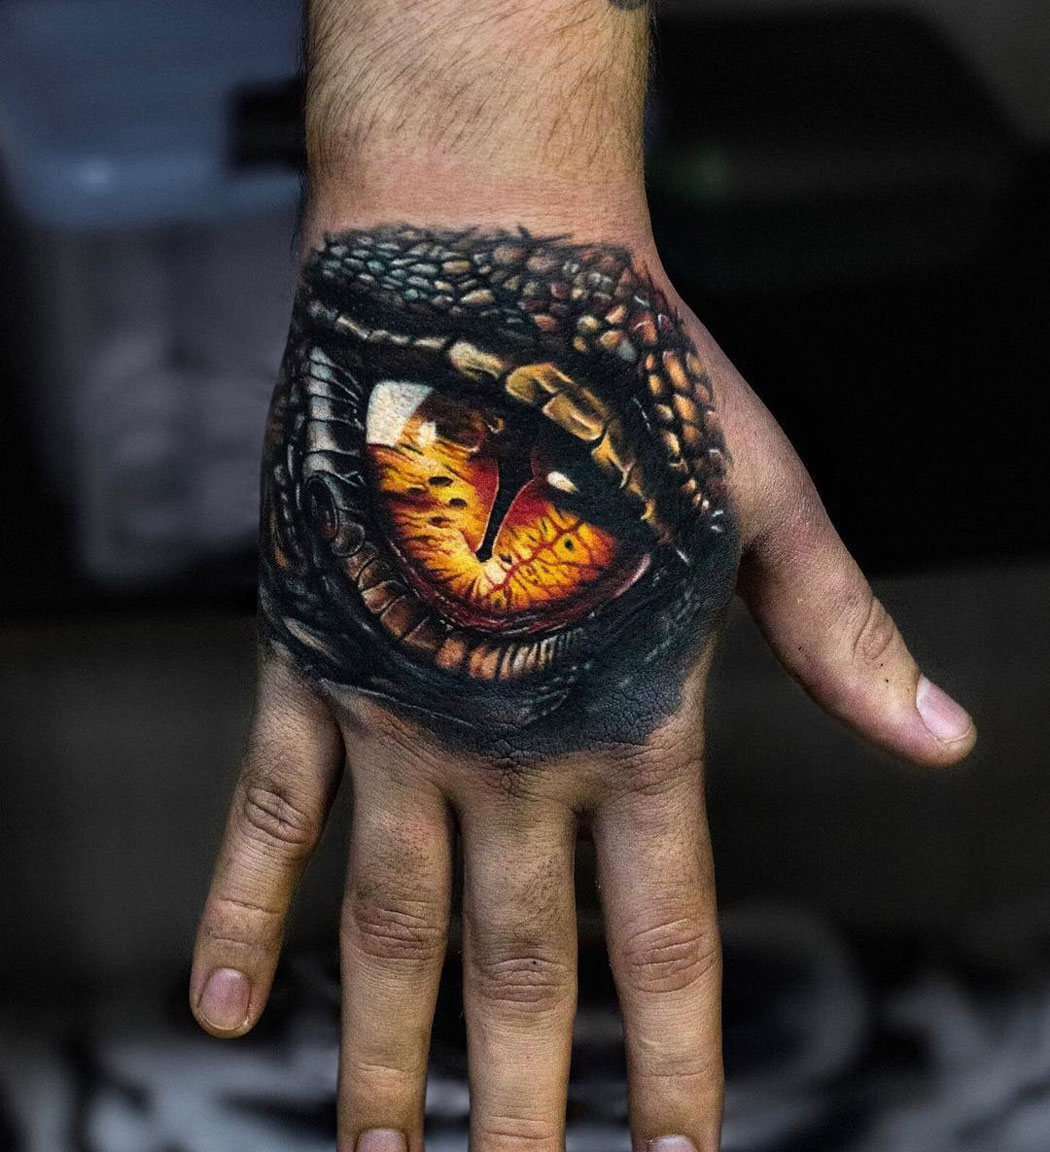 Dragon eye hand tattoo